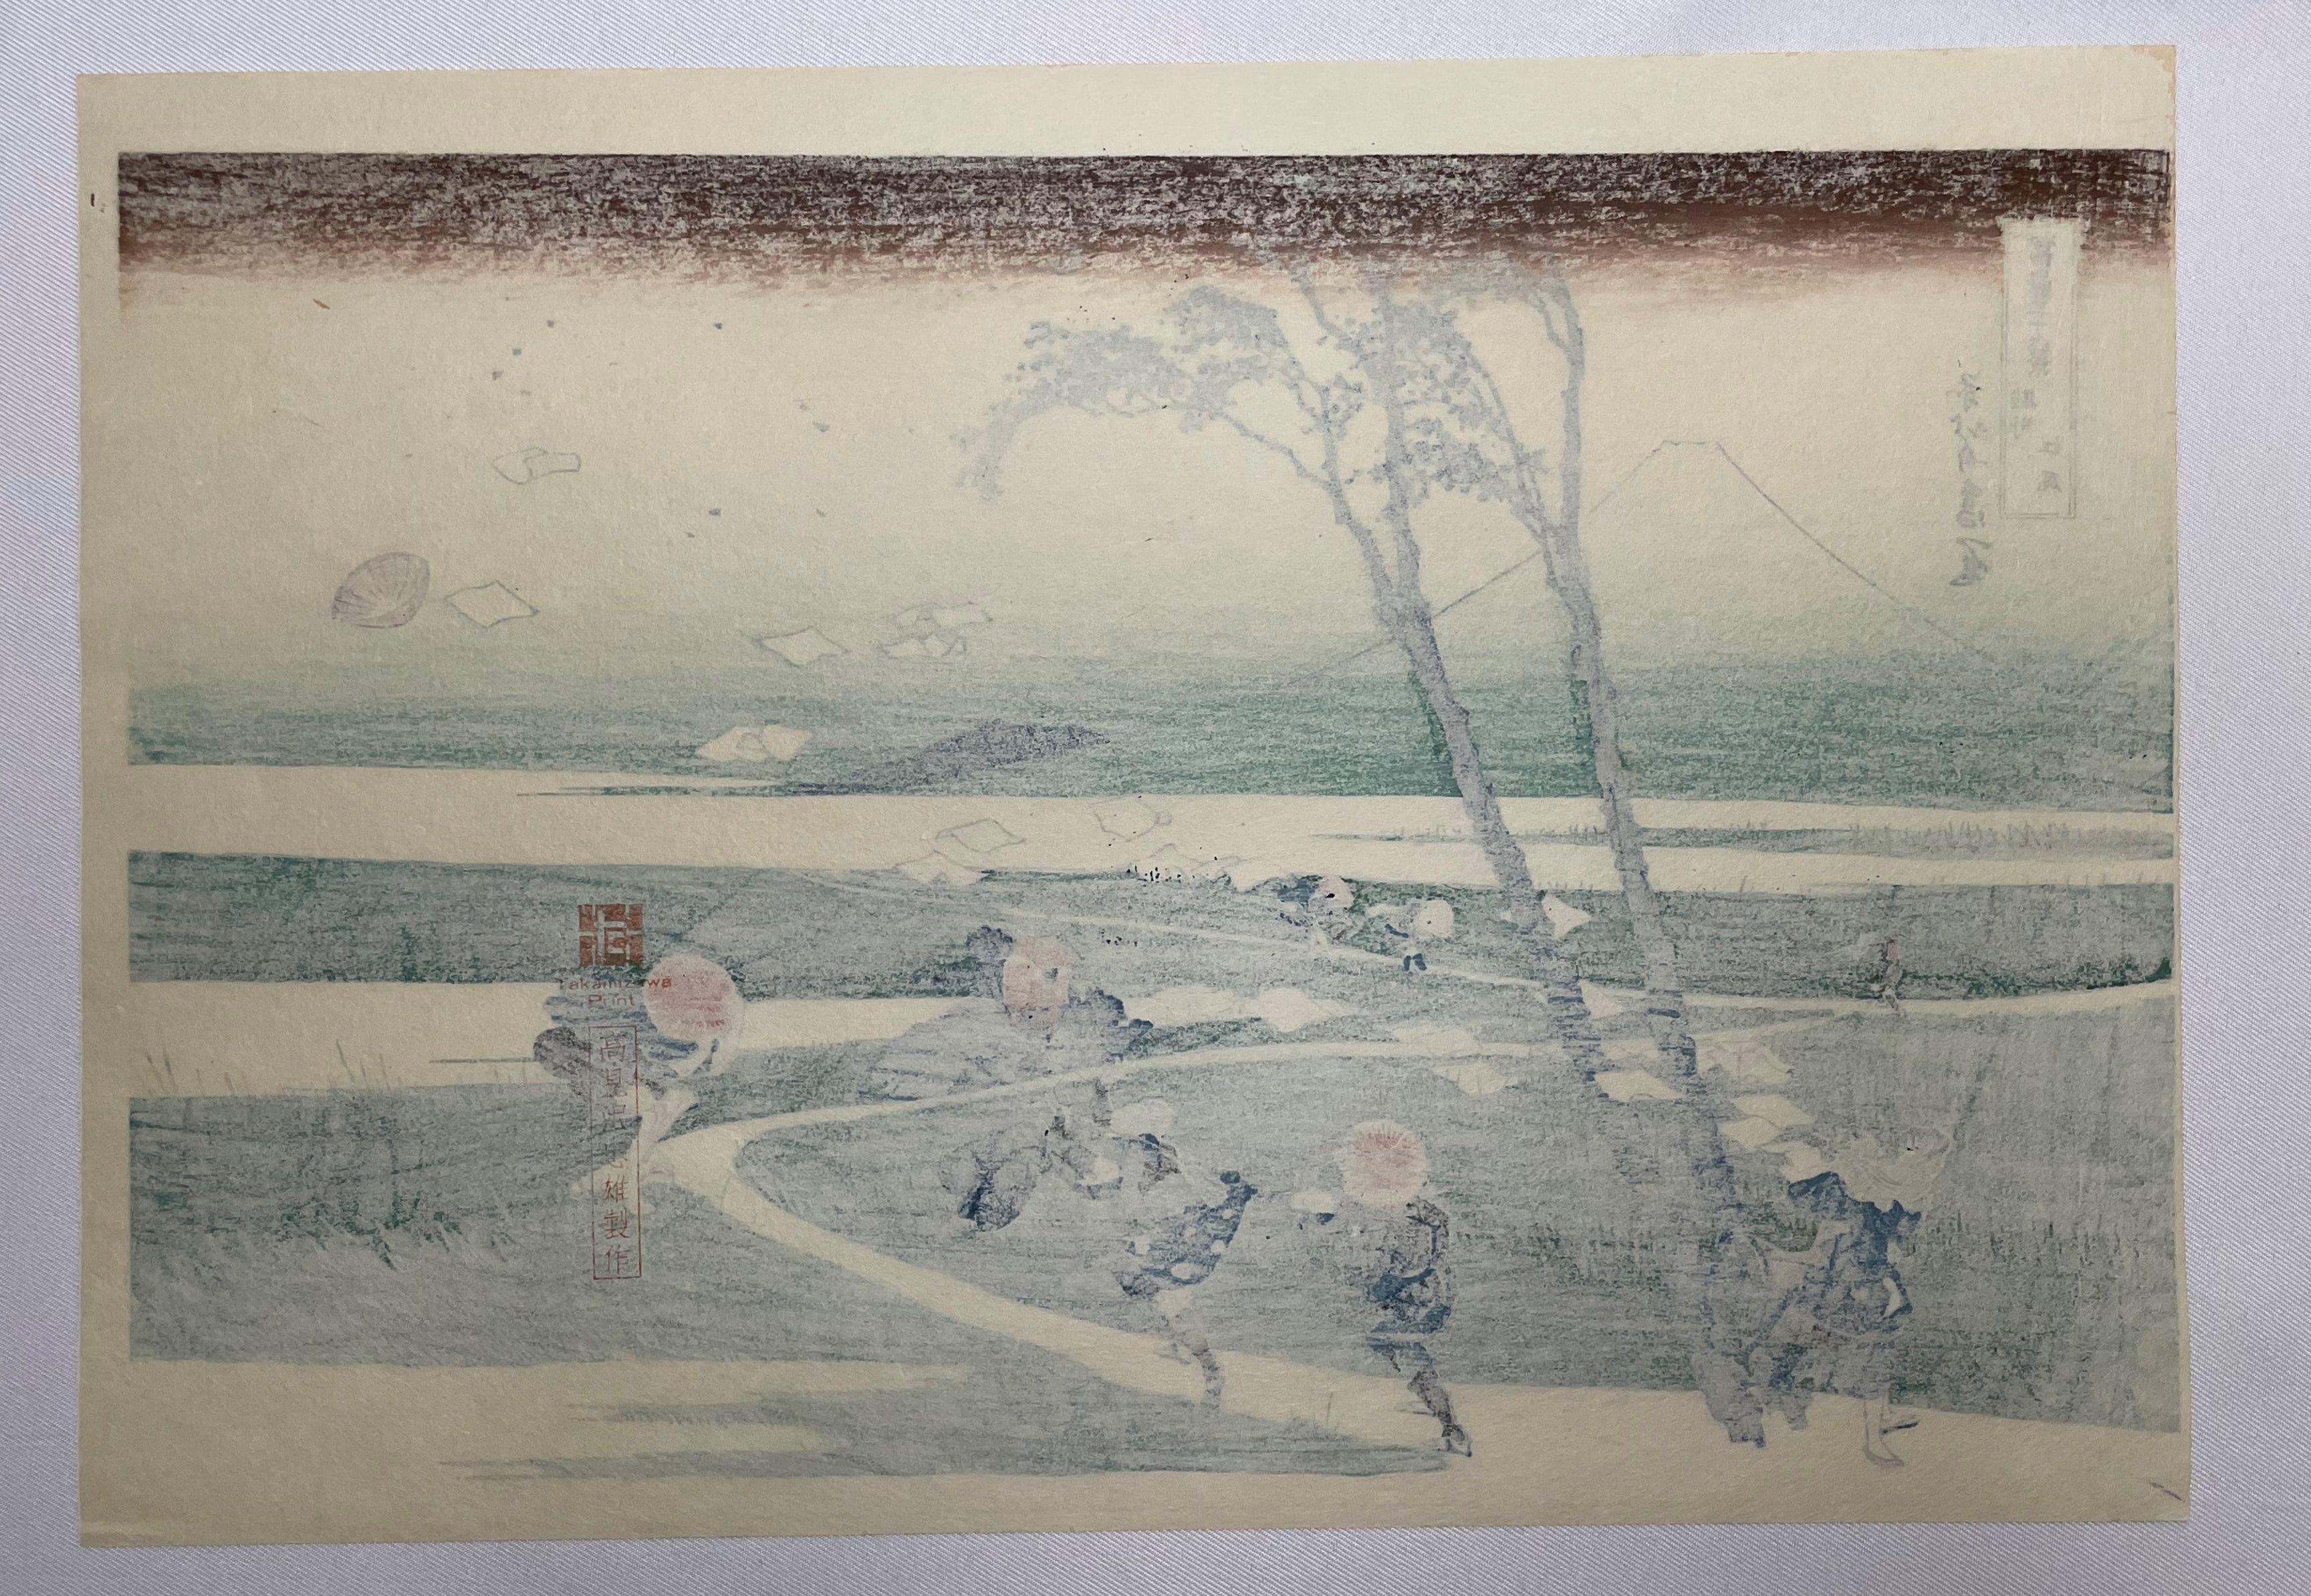 Ejiri in Sunshu (Woodblock Print)